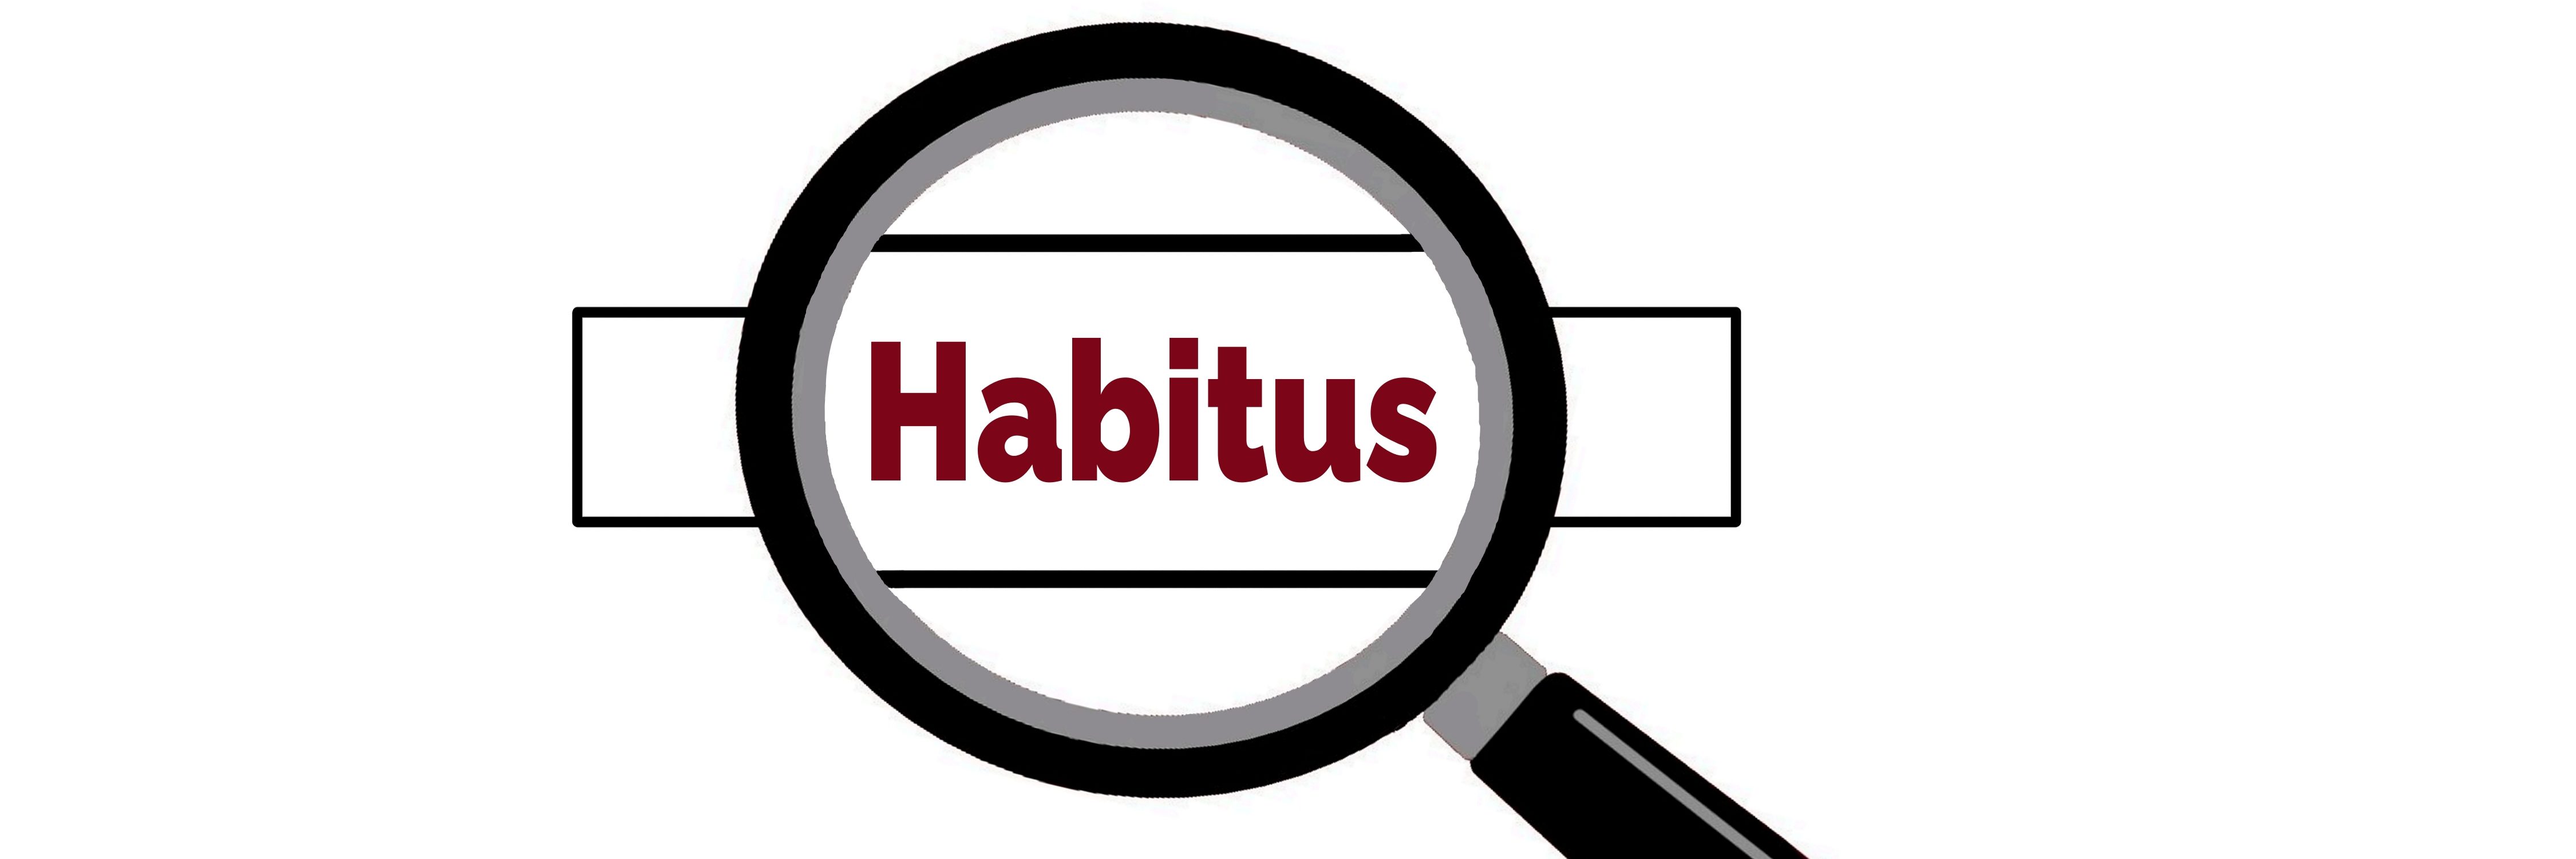 Habitus rf